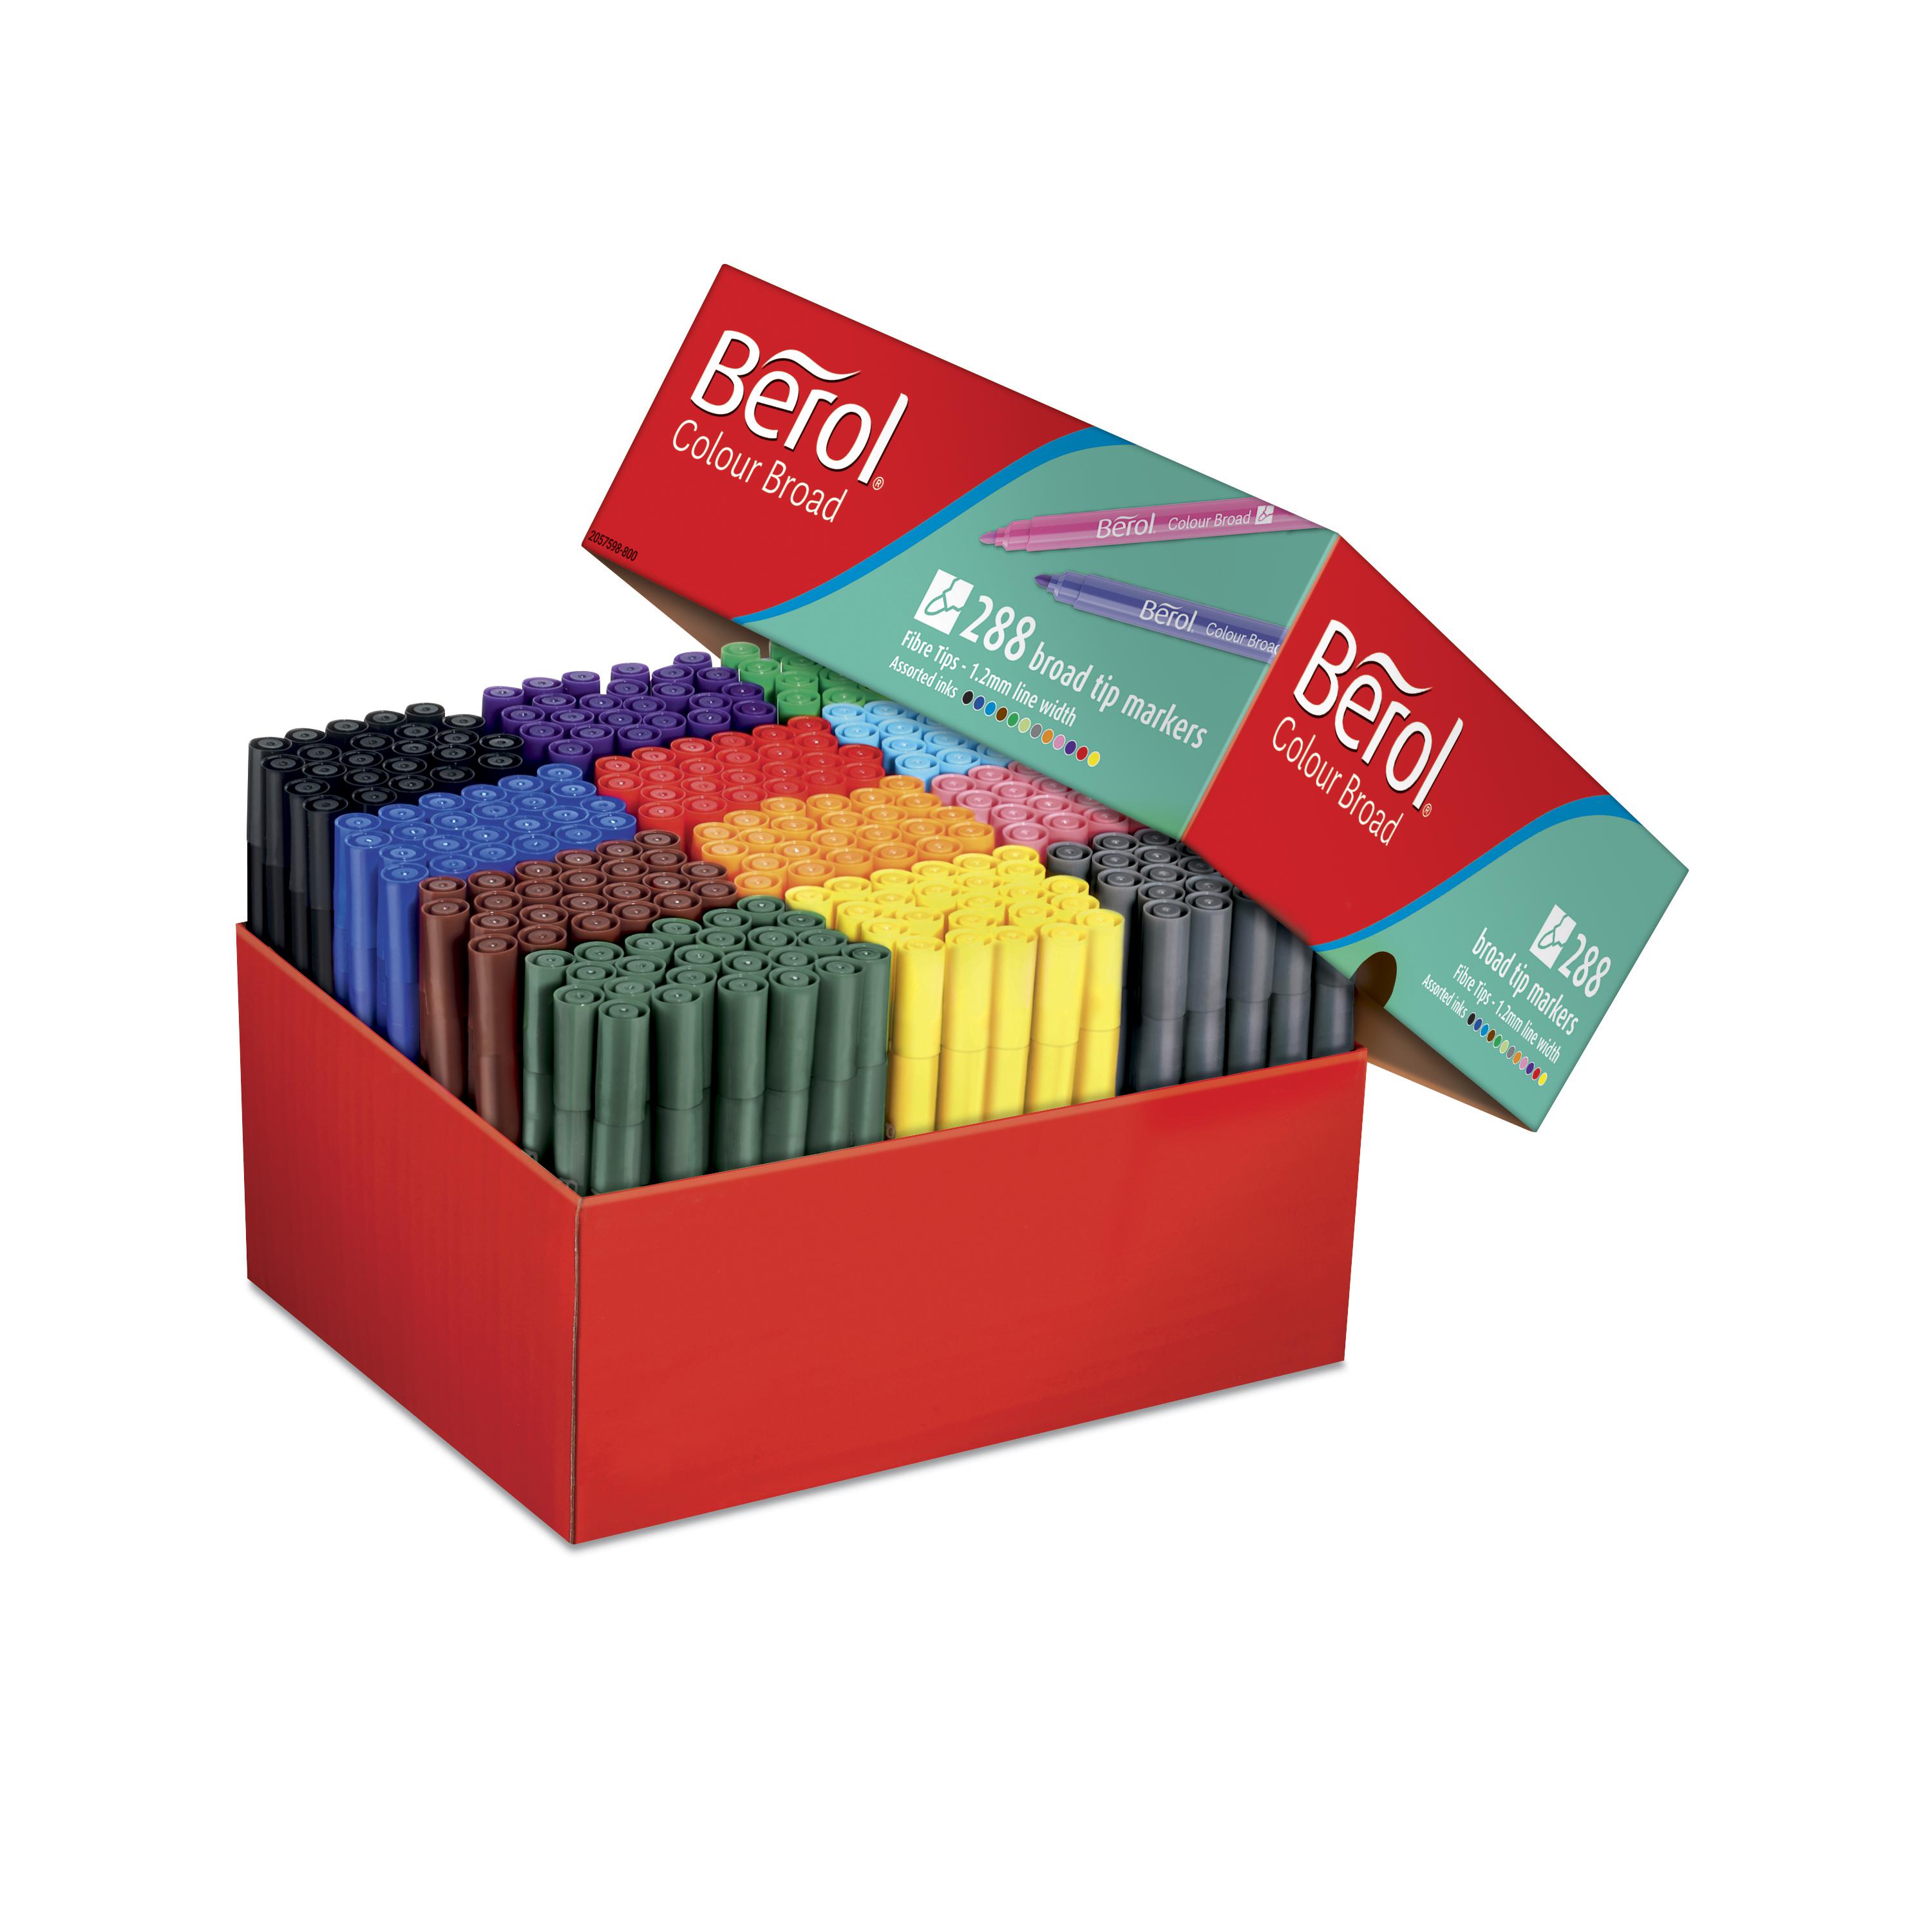 Berol colour broad pens class pack of 288 